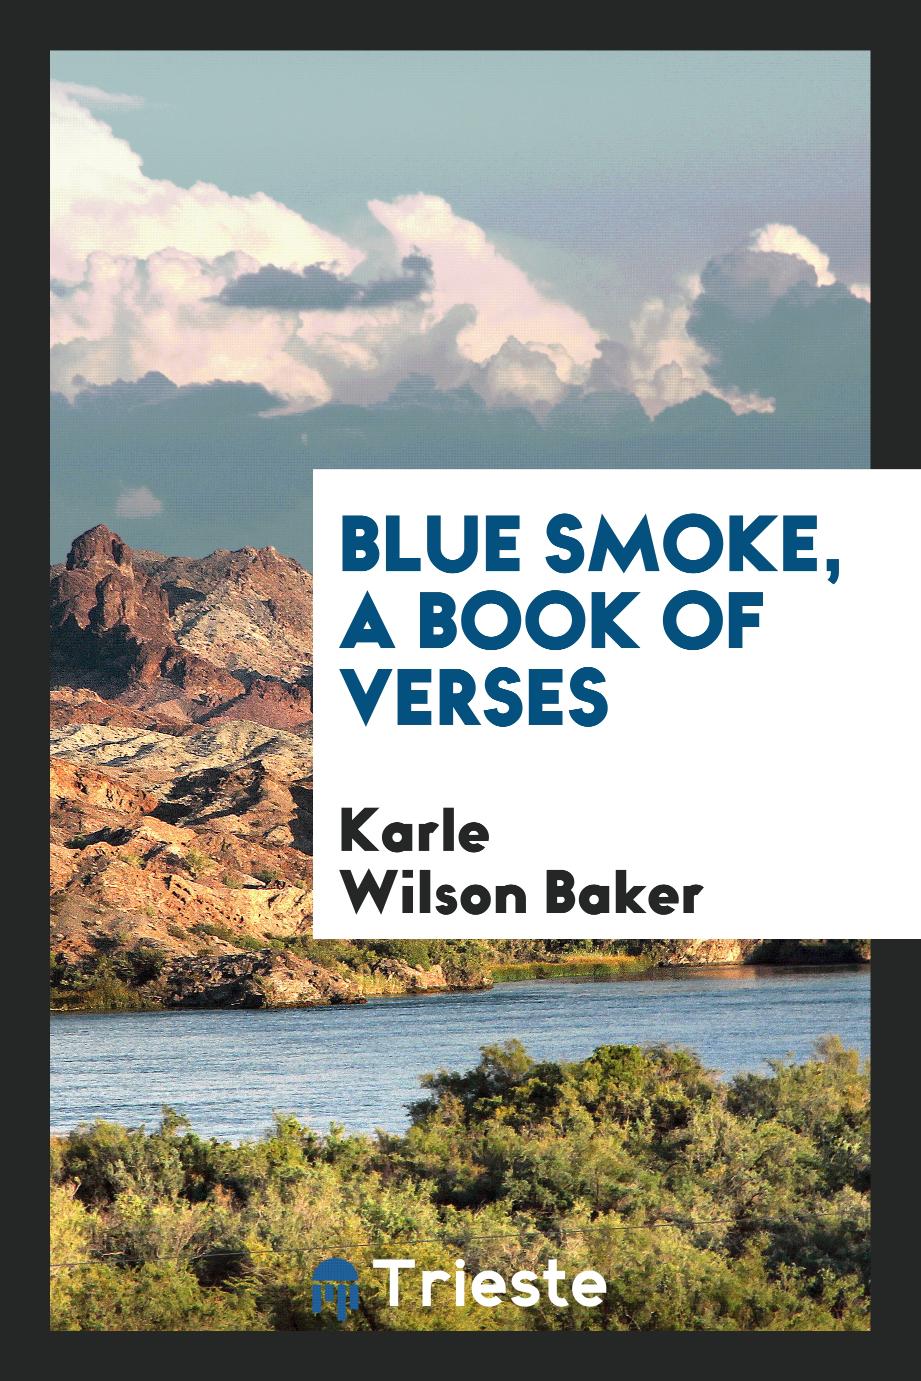 Blue smoke, a book of verses